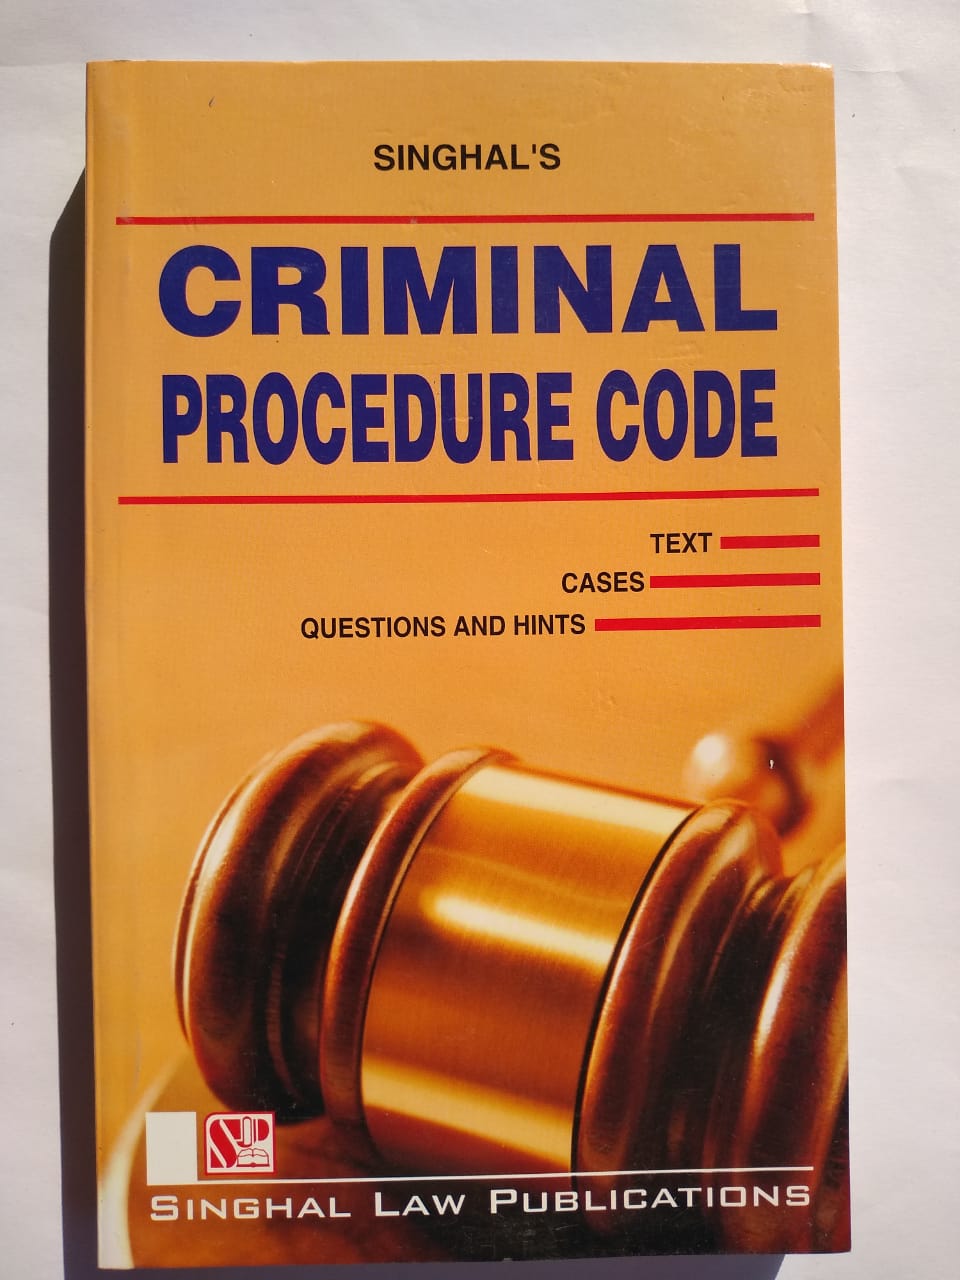 Singhal's Criminal Procedure Code